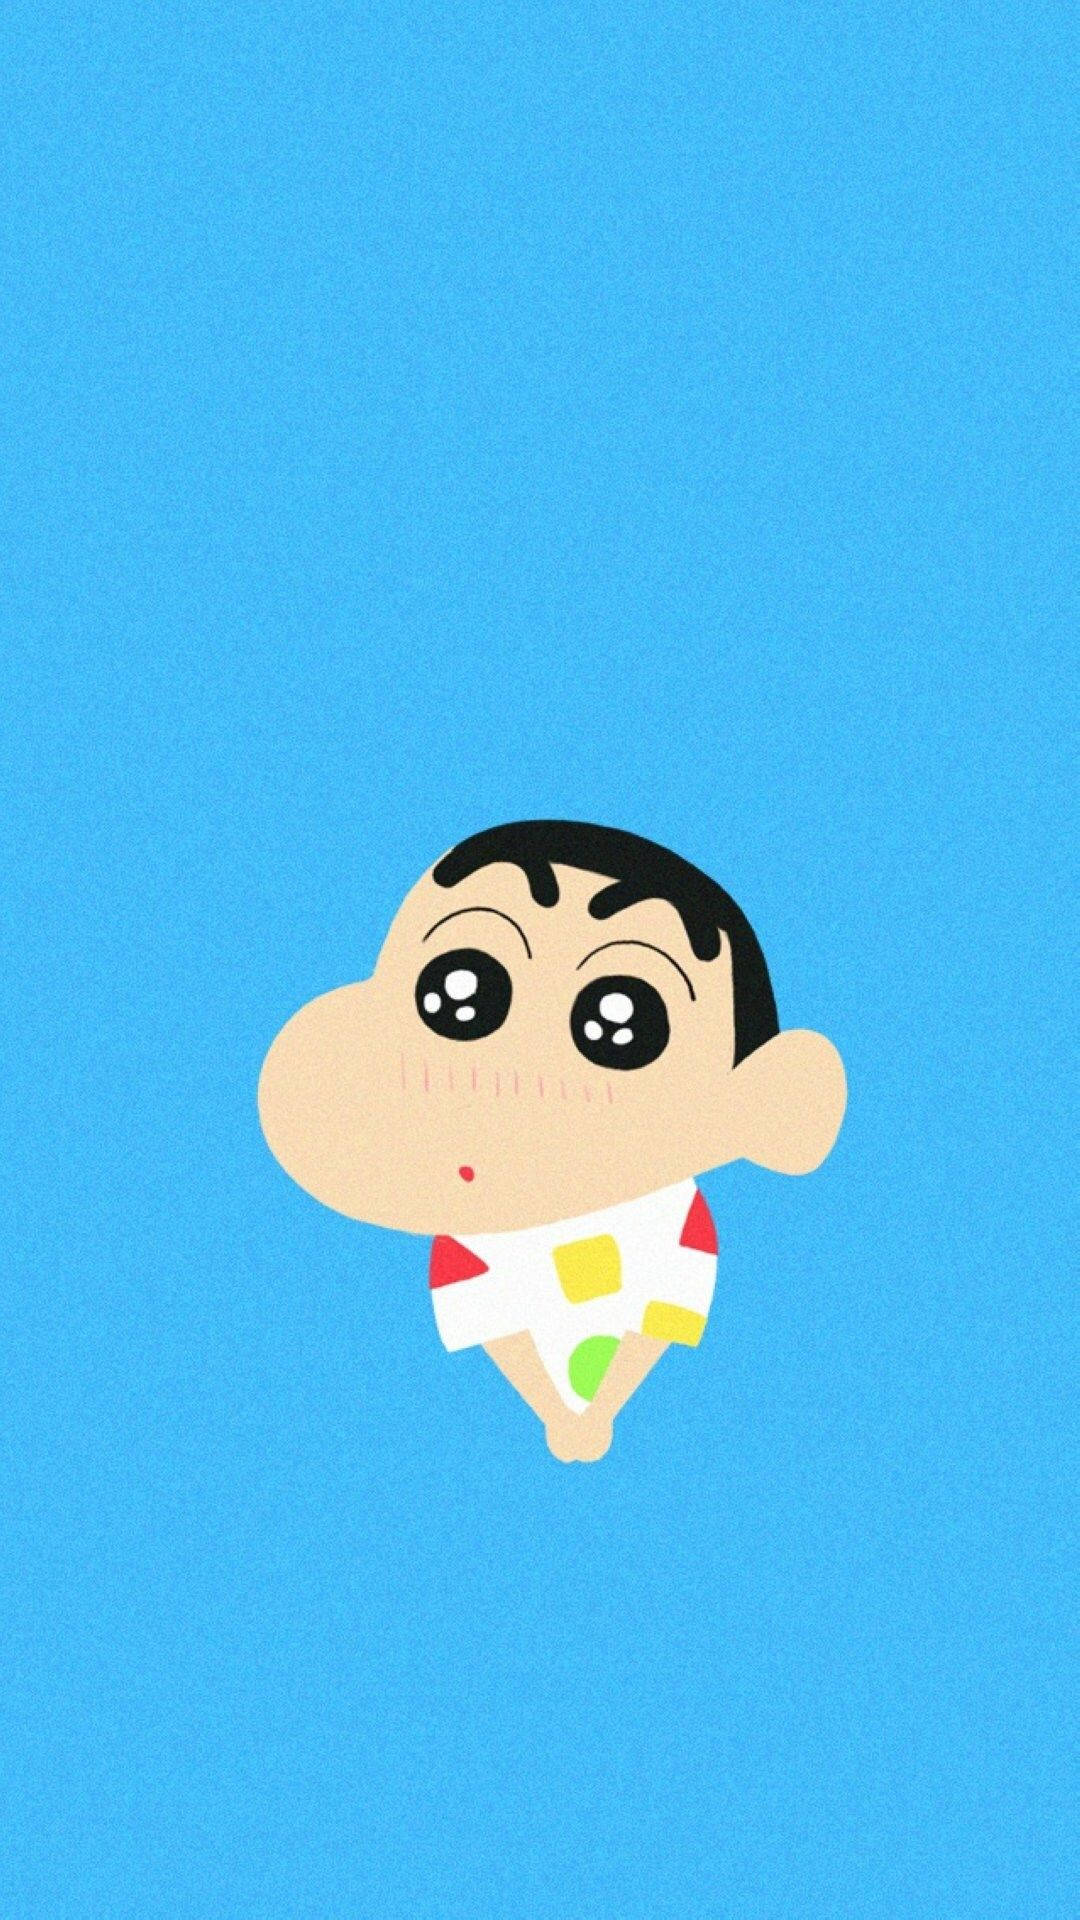 Download Japanese Cartoon Character Shin Chan Iphone Wallpaper | Wallpapers .com